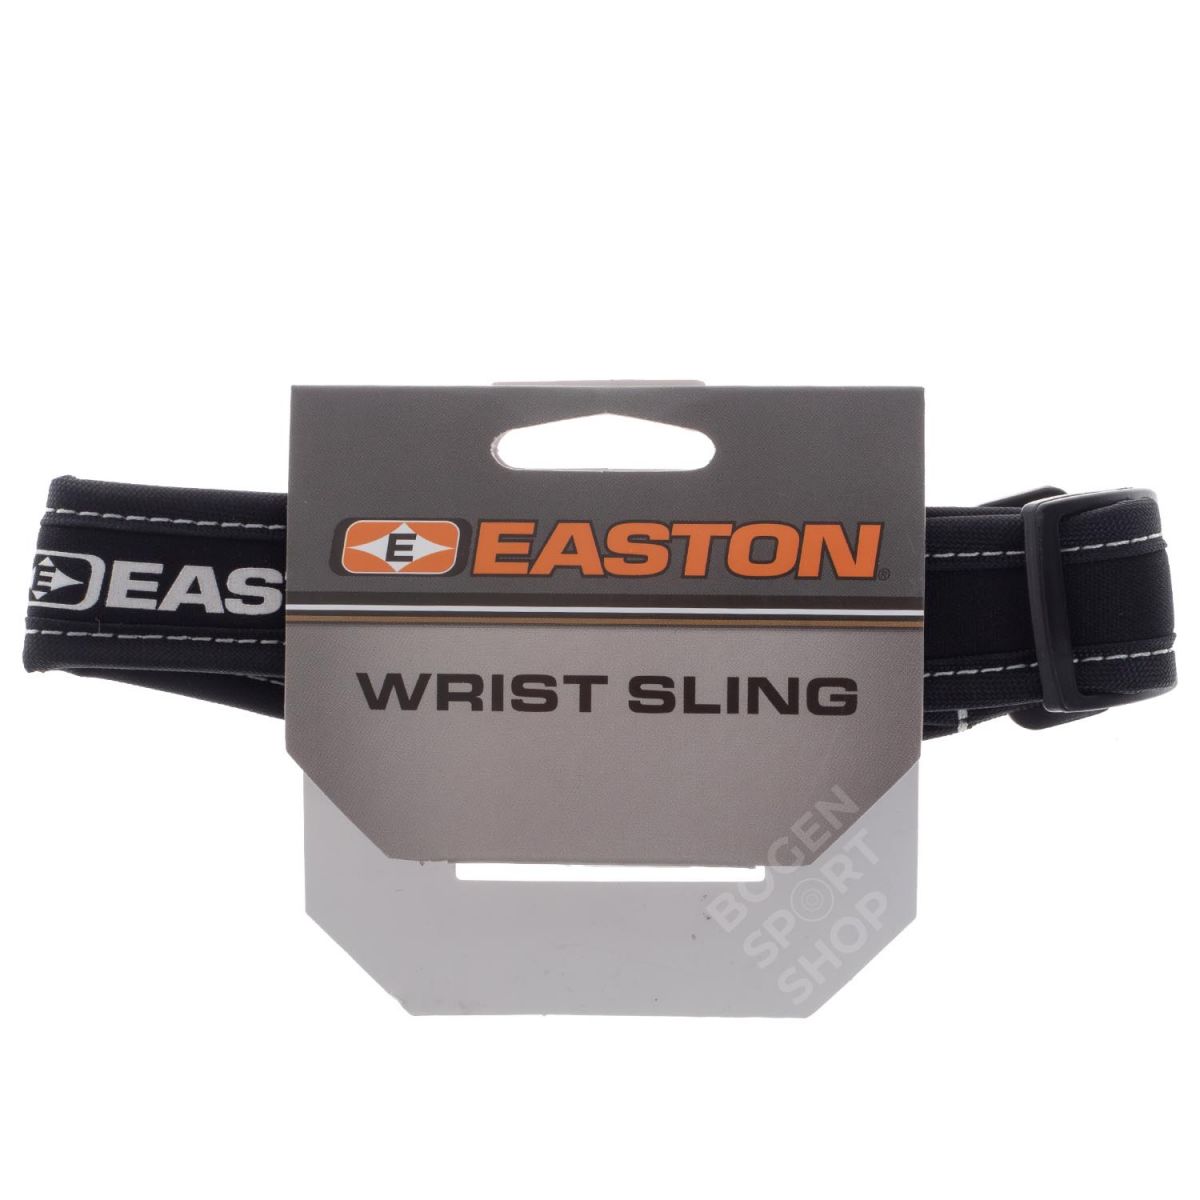 Easton Wrist Sling